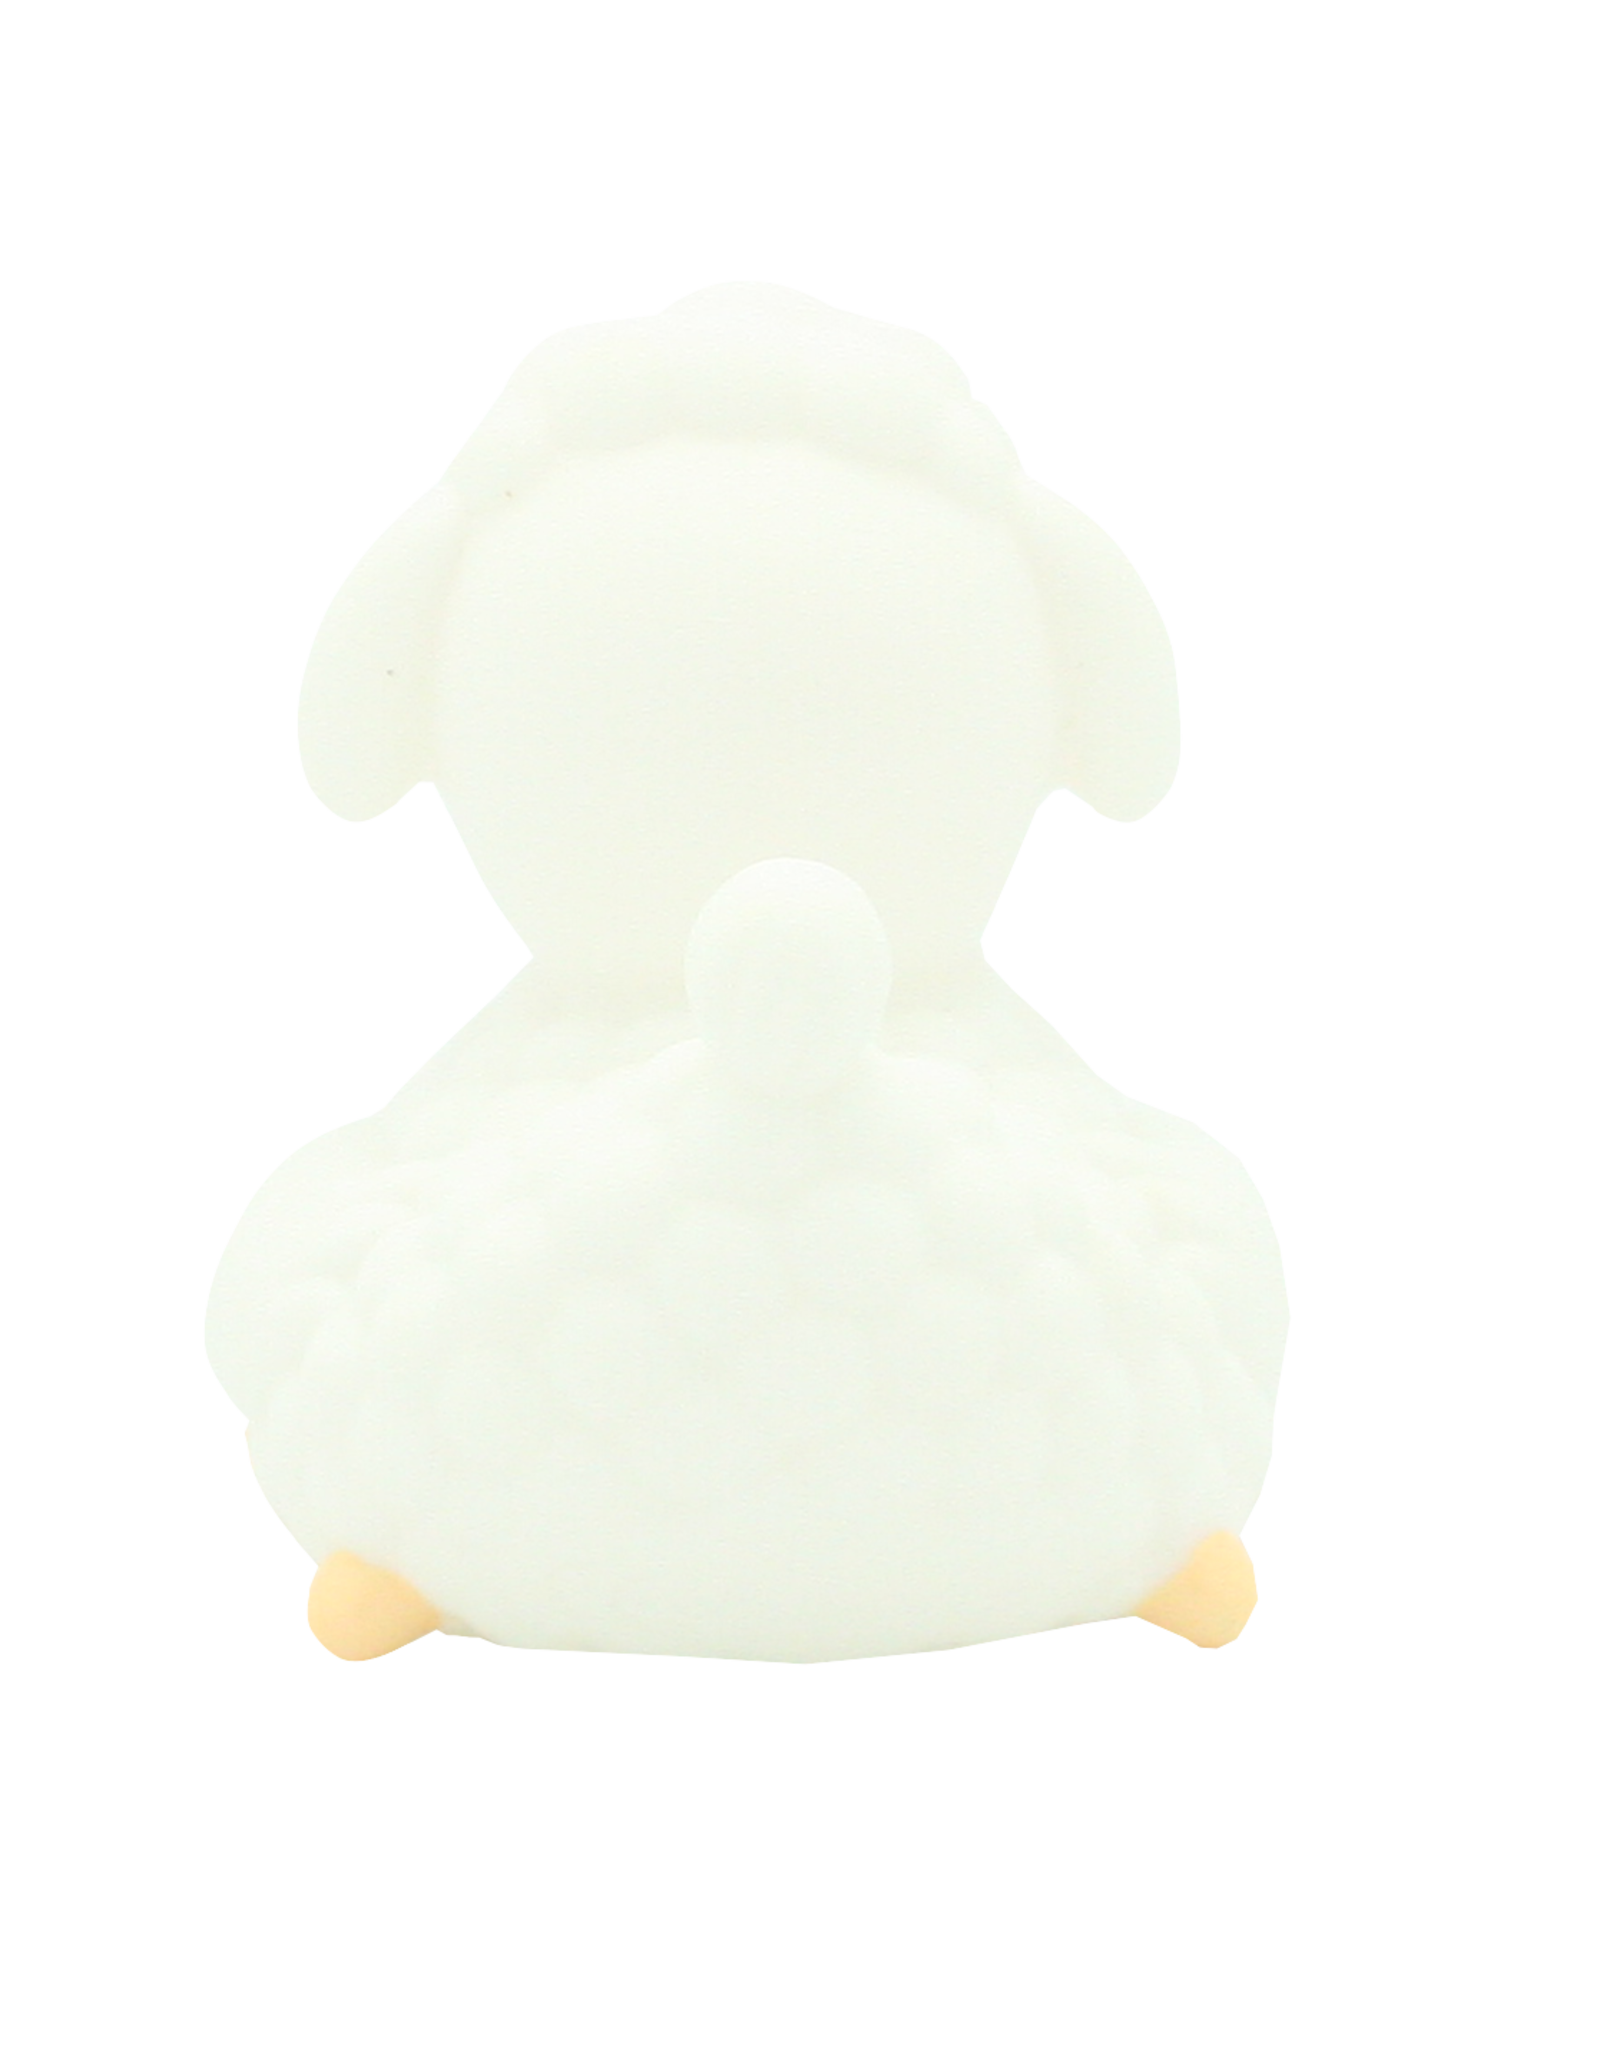 Lilalu White Sheep Rubber Duck